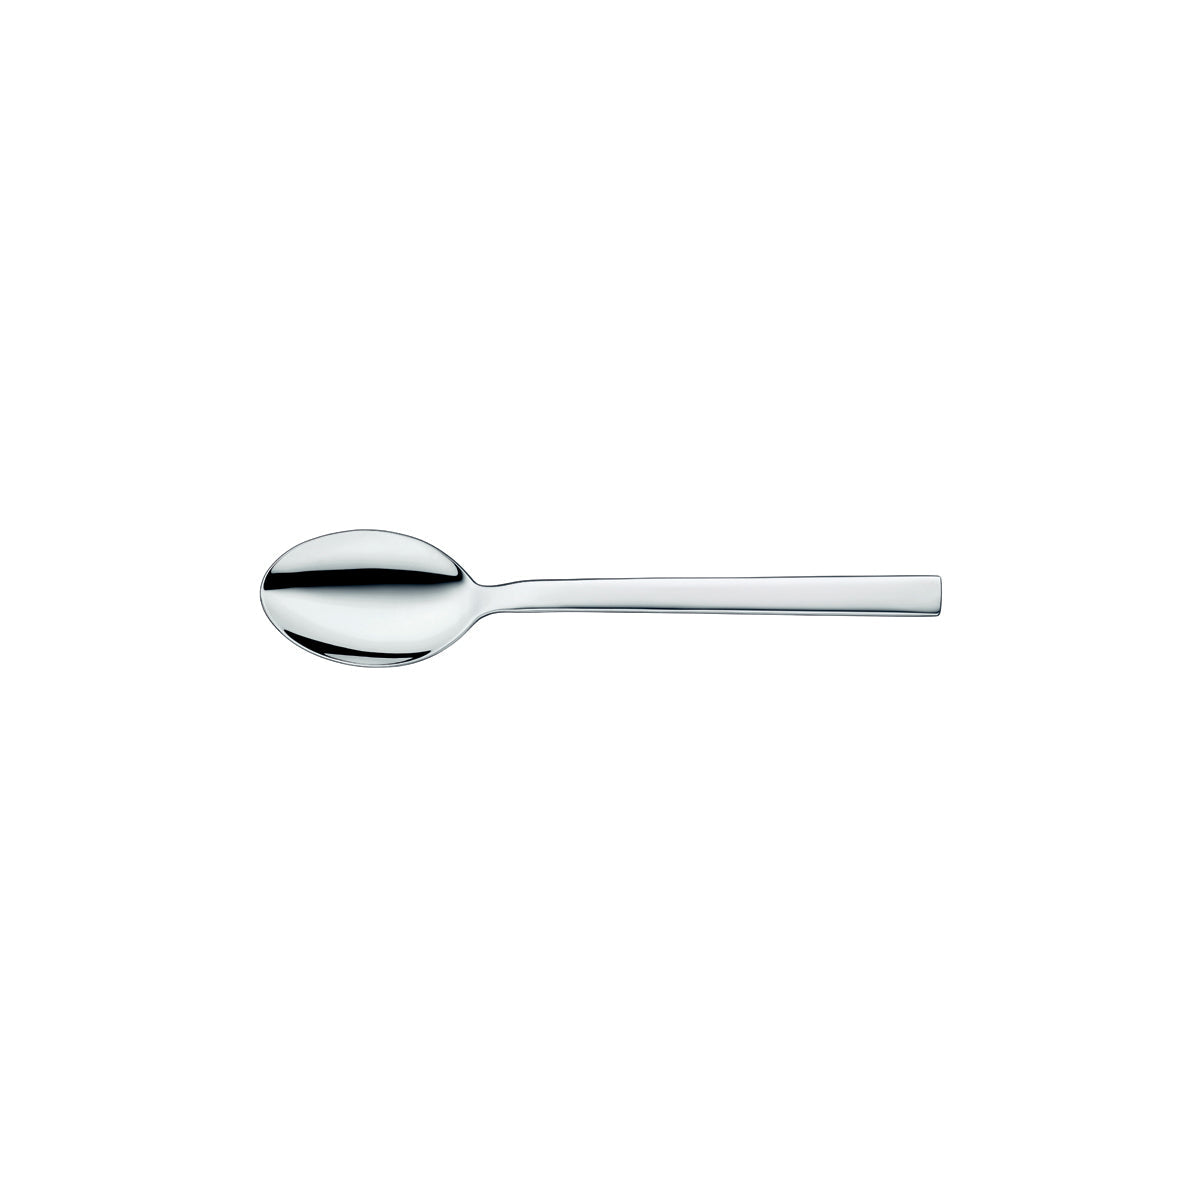 10.5301.6060 WMF Unic Table Spoon Silverplated Tomkin Australia Hospitality Supplies